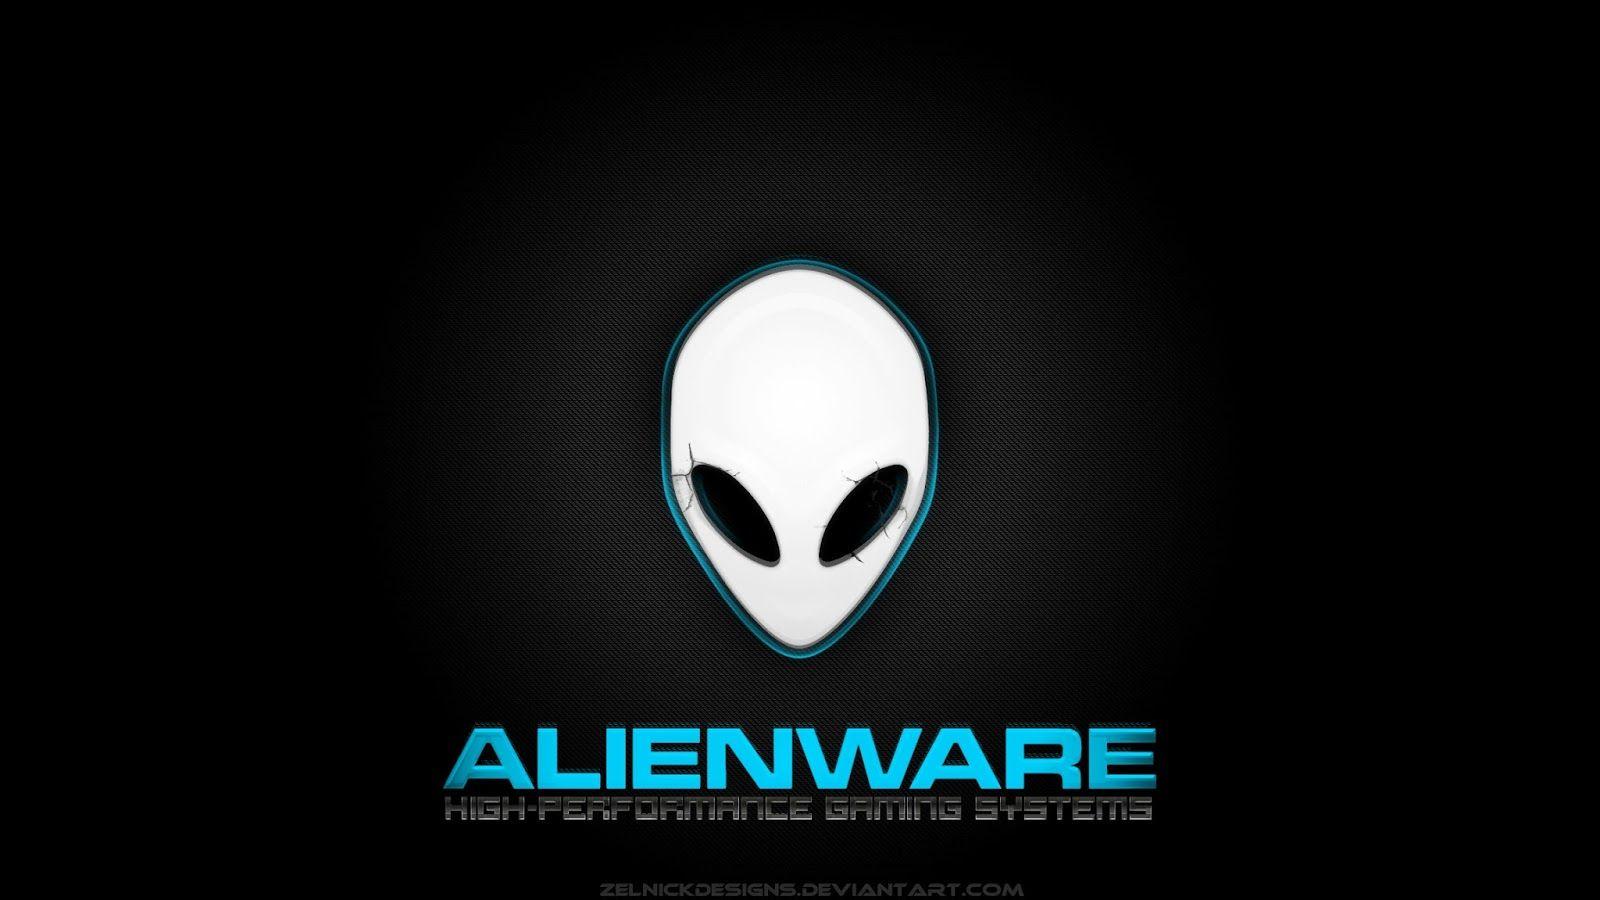 Alienware Logo Colorful Background Wallpaper 4K PC Desktop 3810c